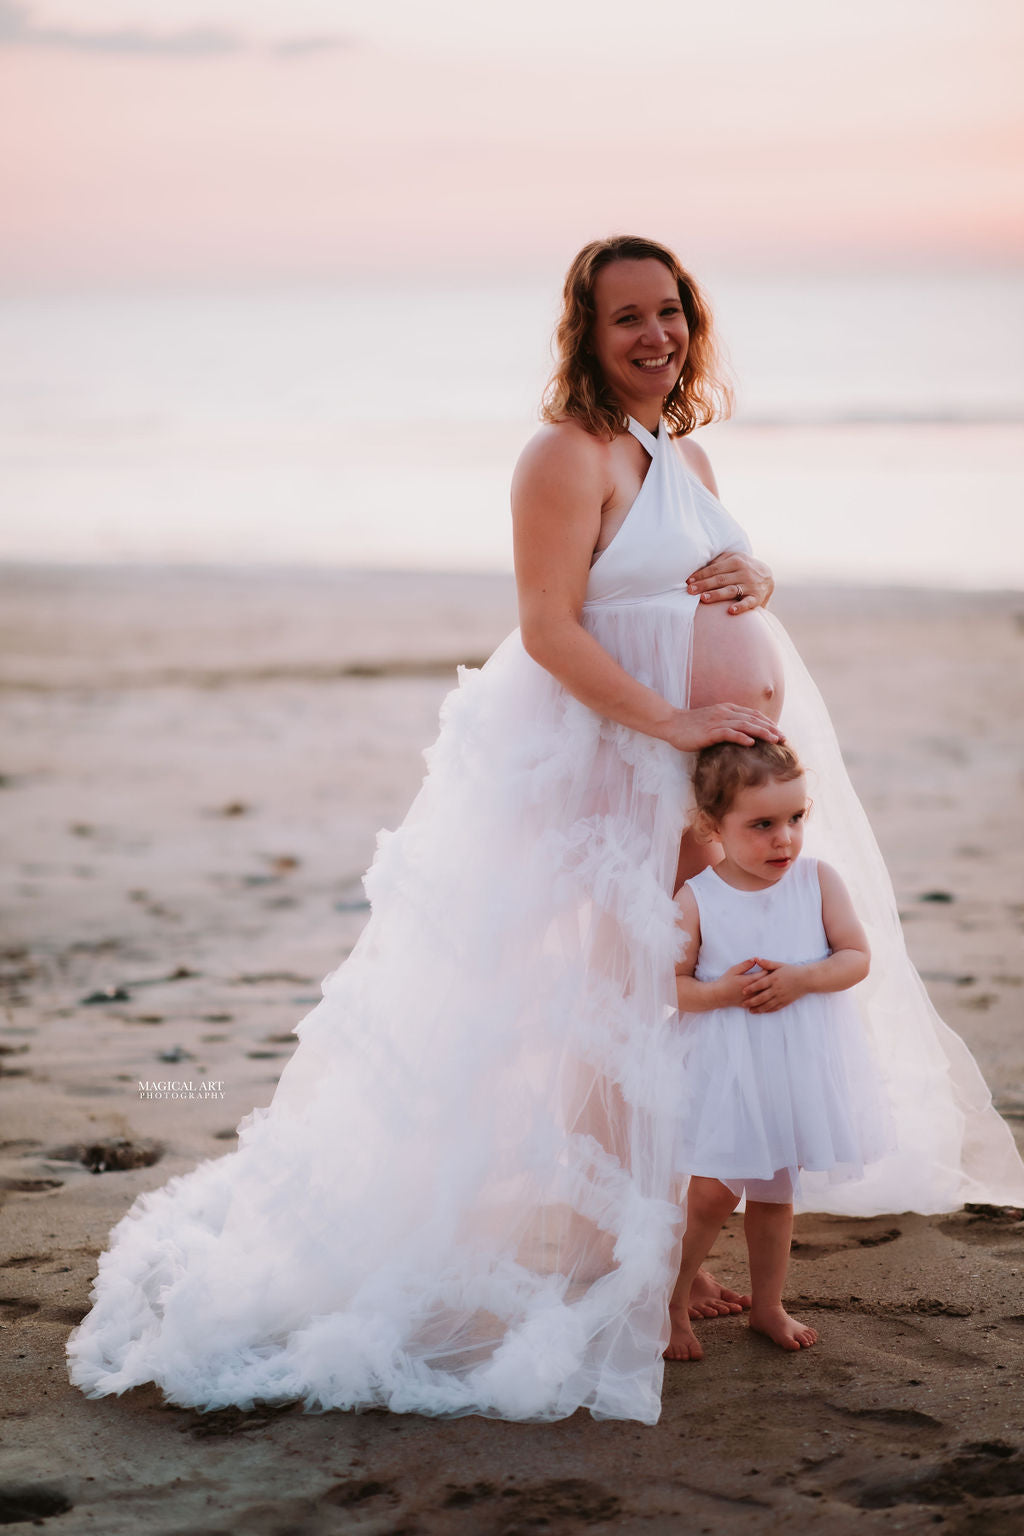 Maternity Photoshoot Dress - White Tulle Dress